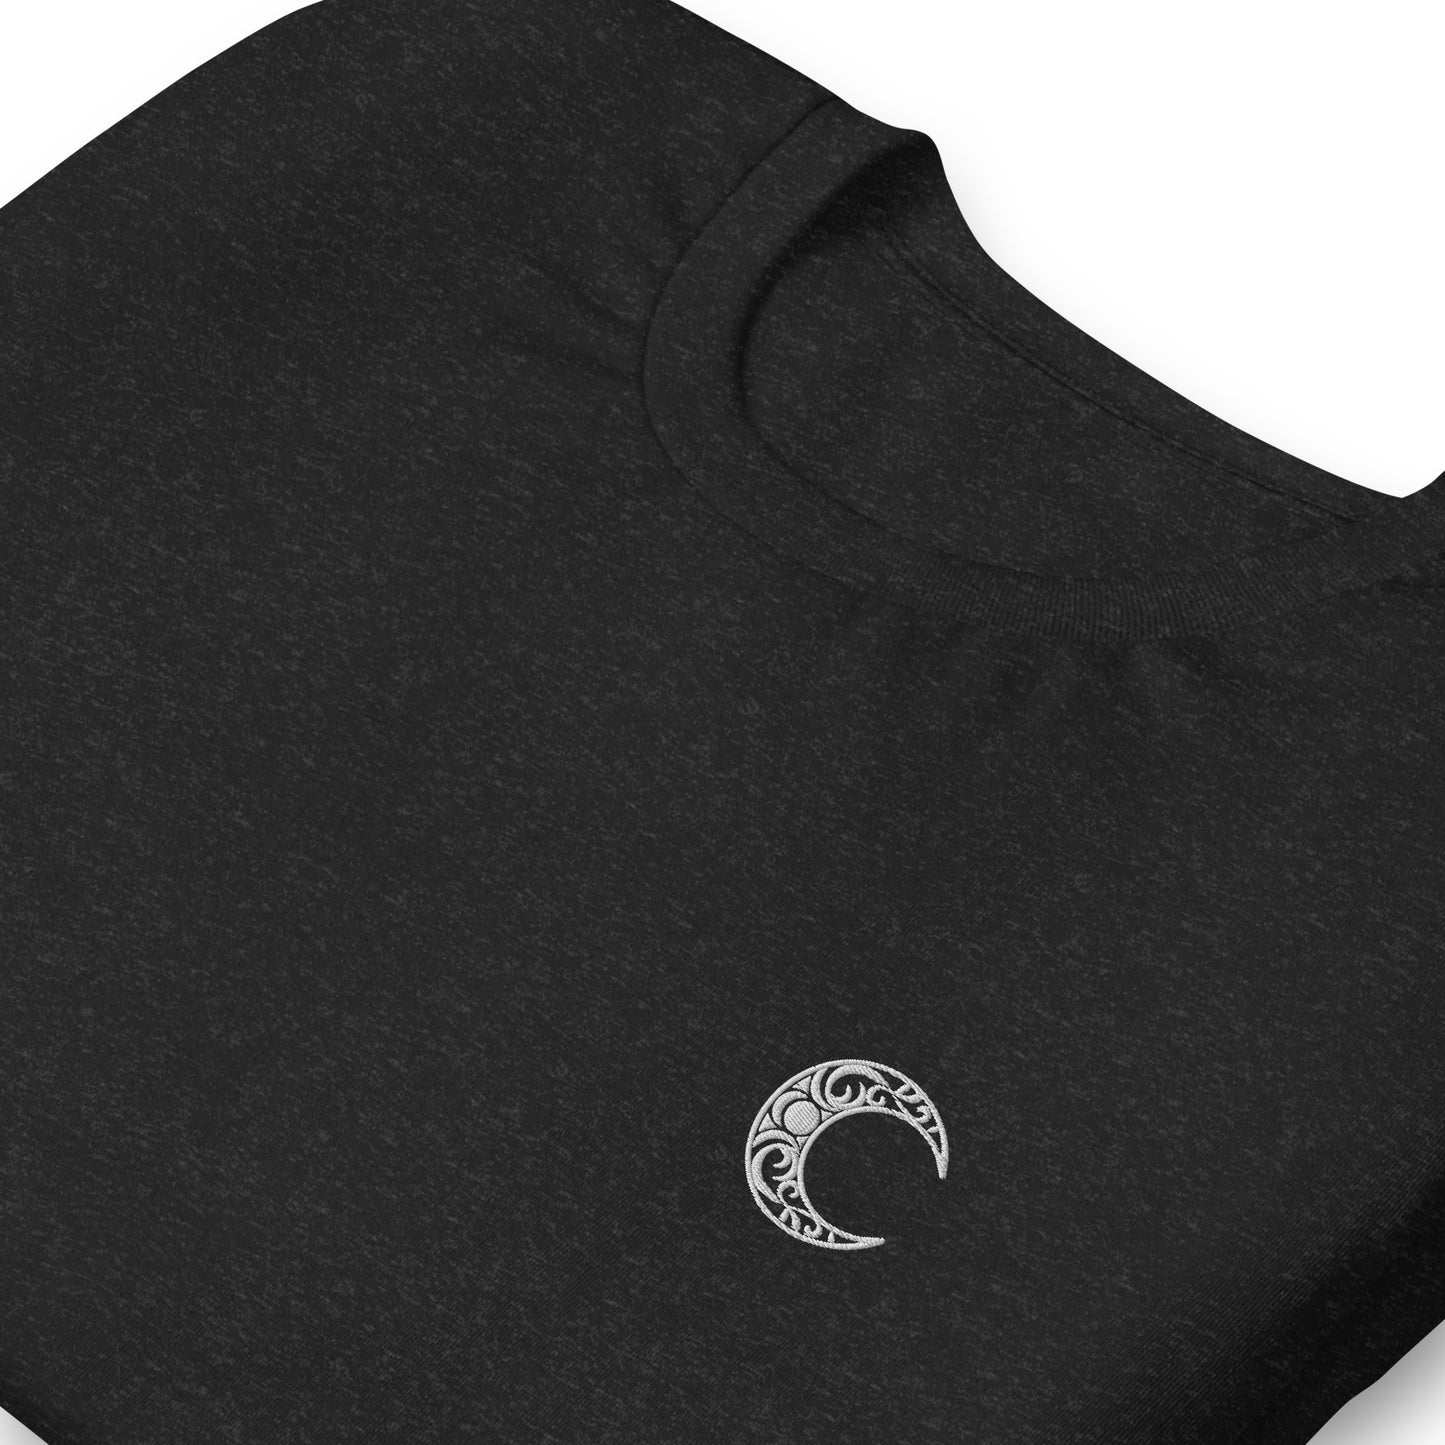 Damerian Elven Moon, Embroidered - Sigil Attire - Unisex T-shirt